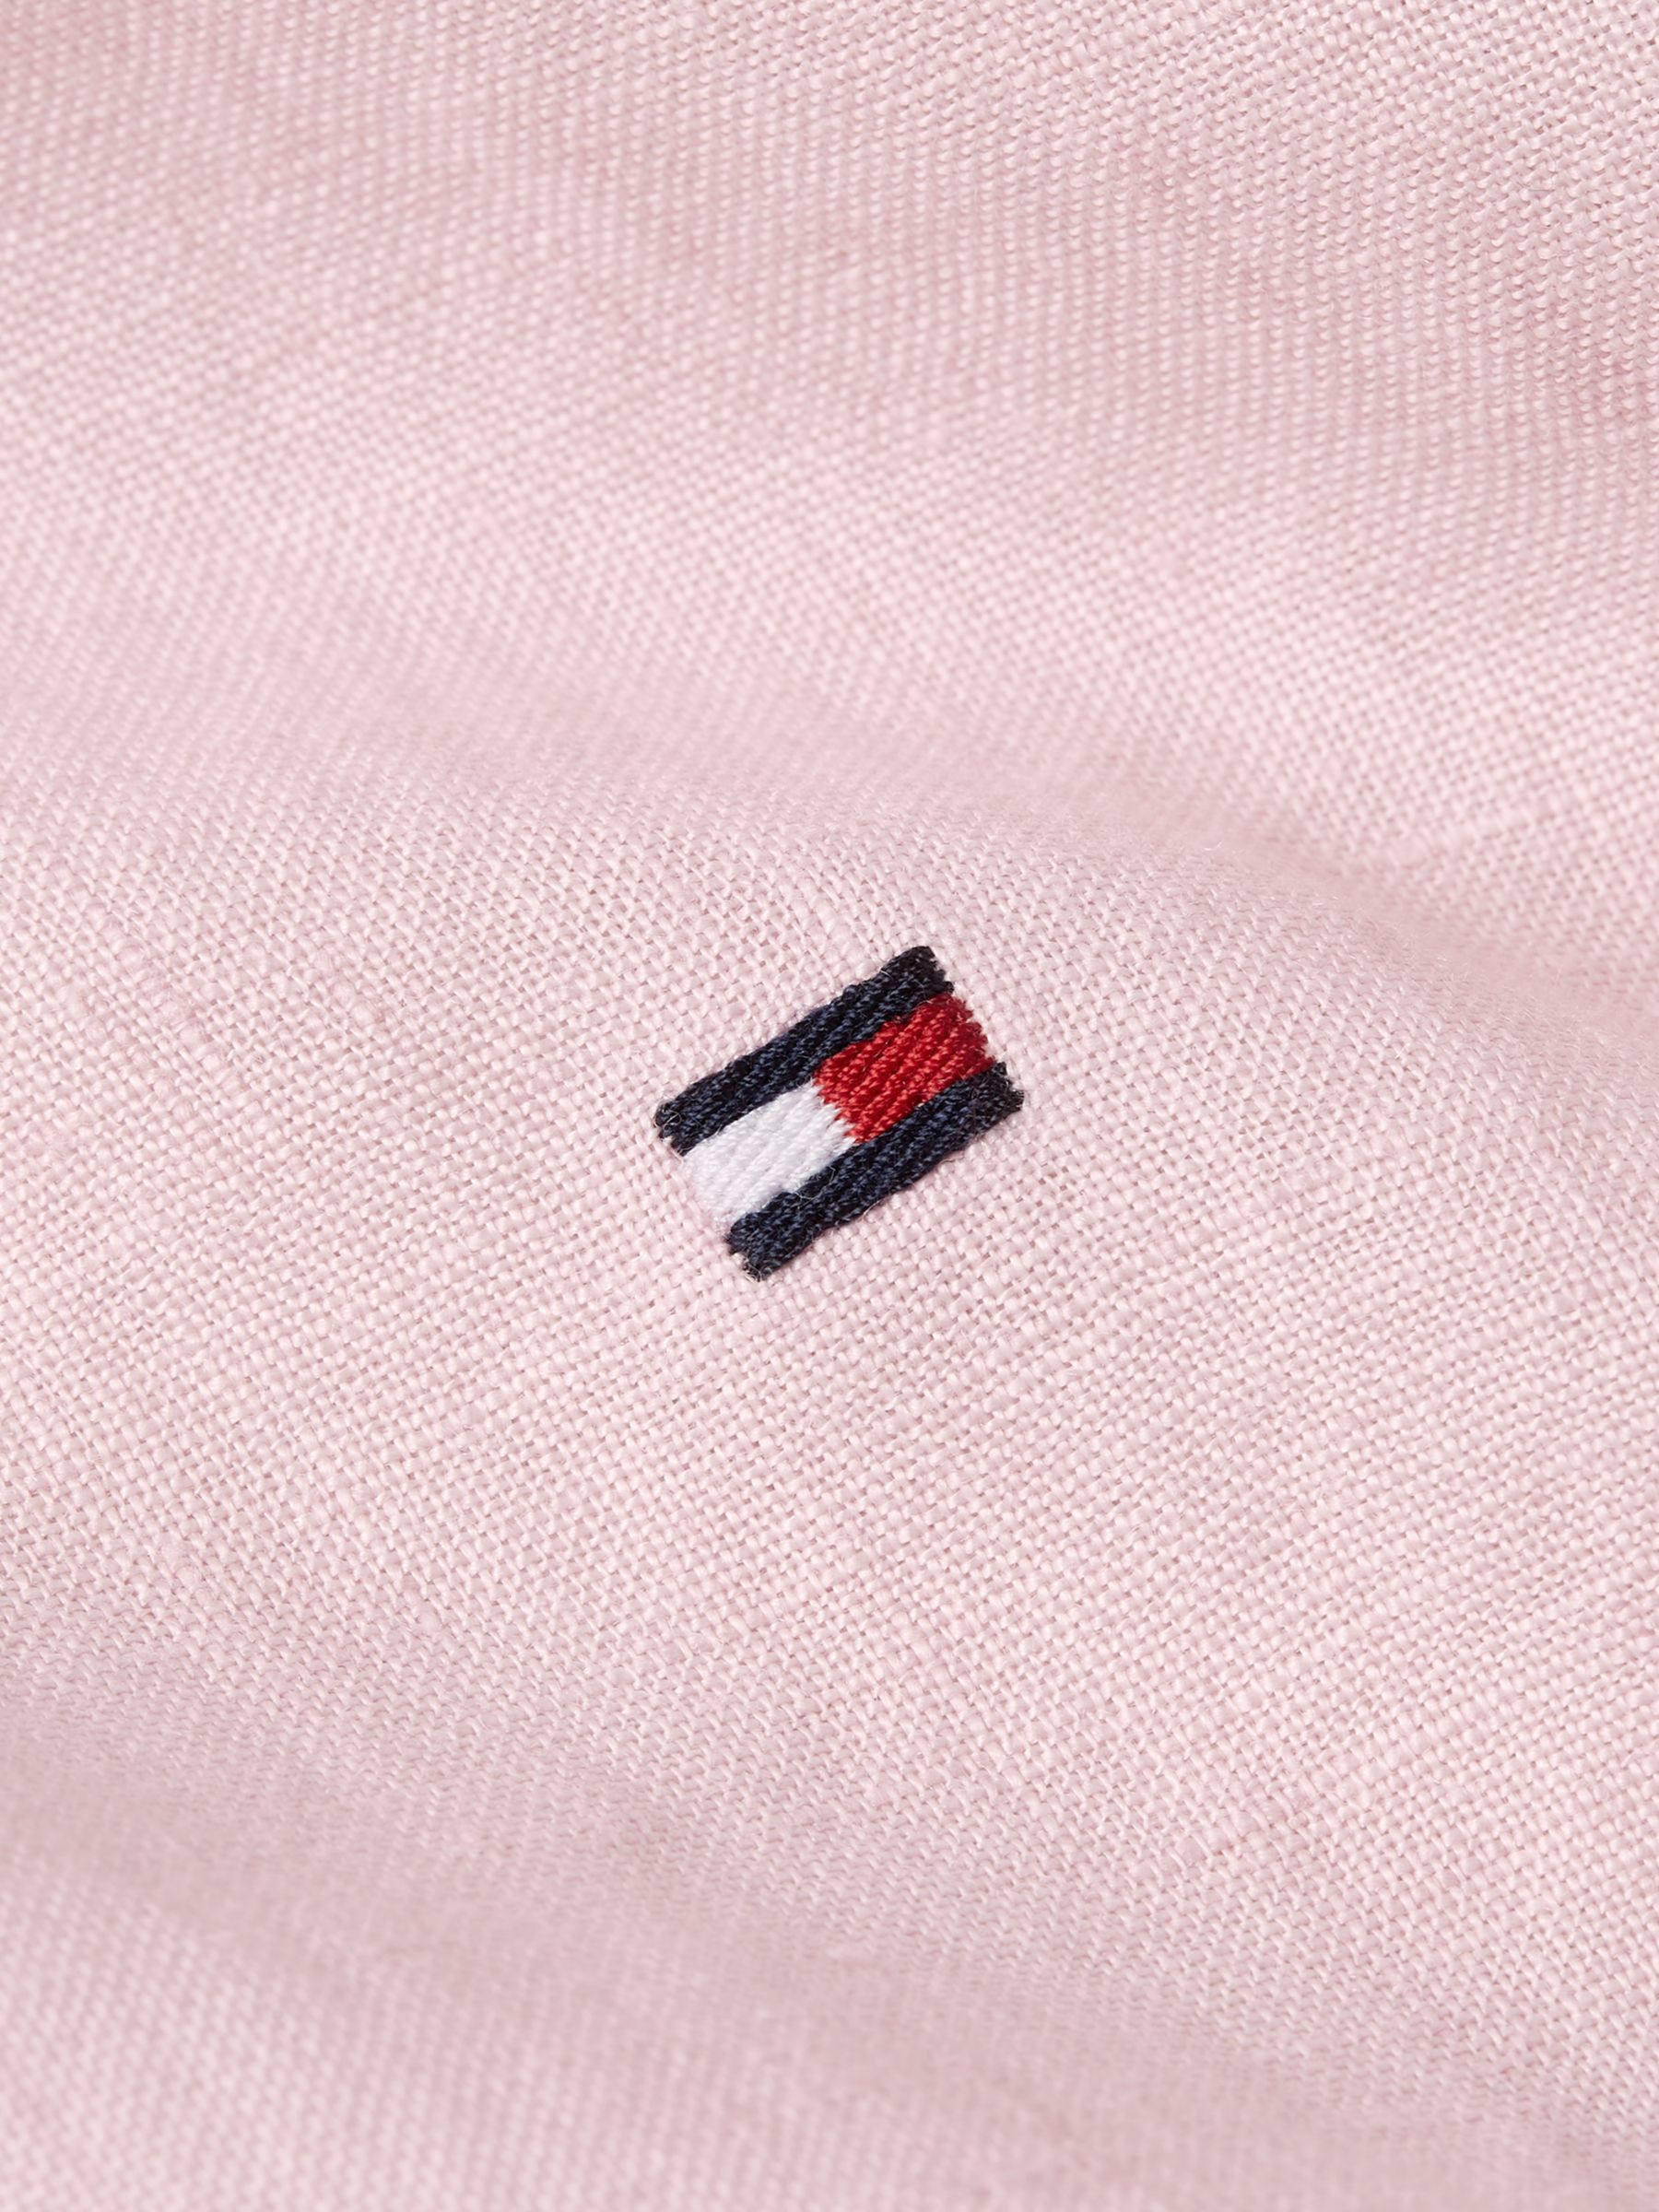 Tommy Hilfiger Linen Pigment Dyed Shirt, Pink, XS